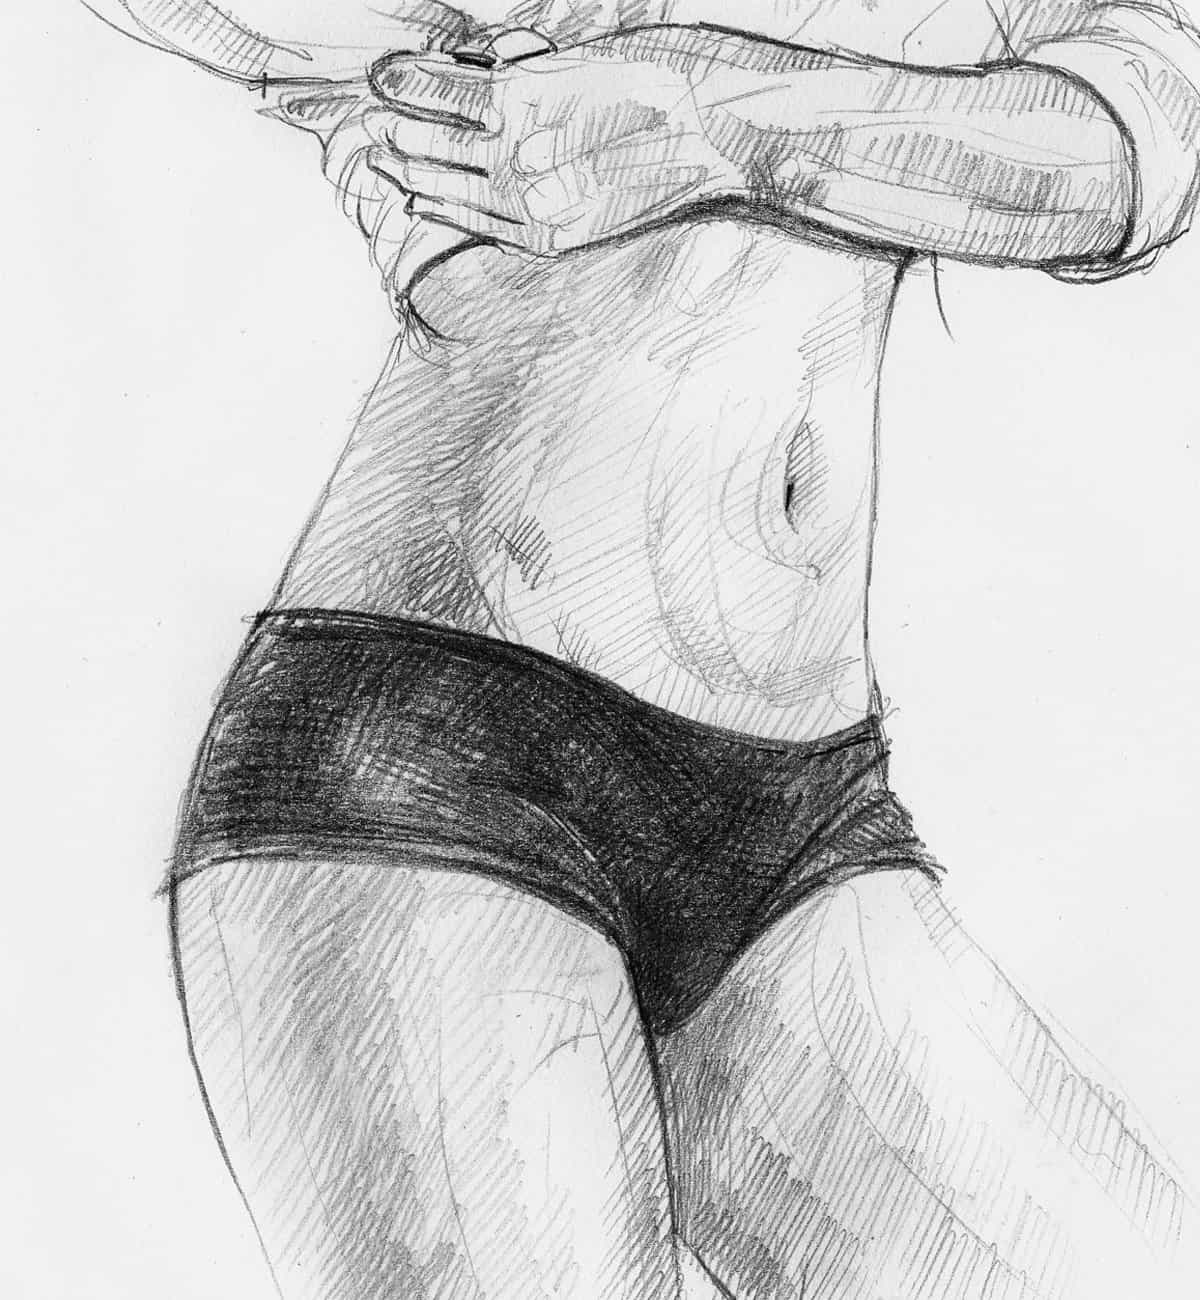 Pencil drawing of woman